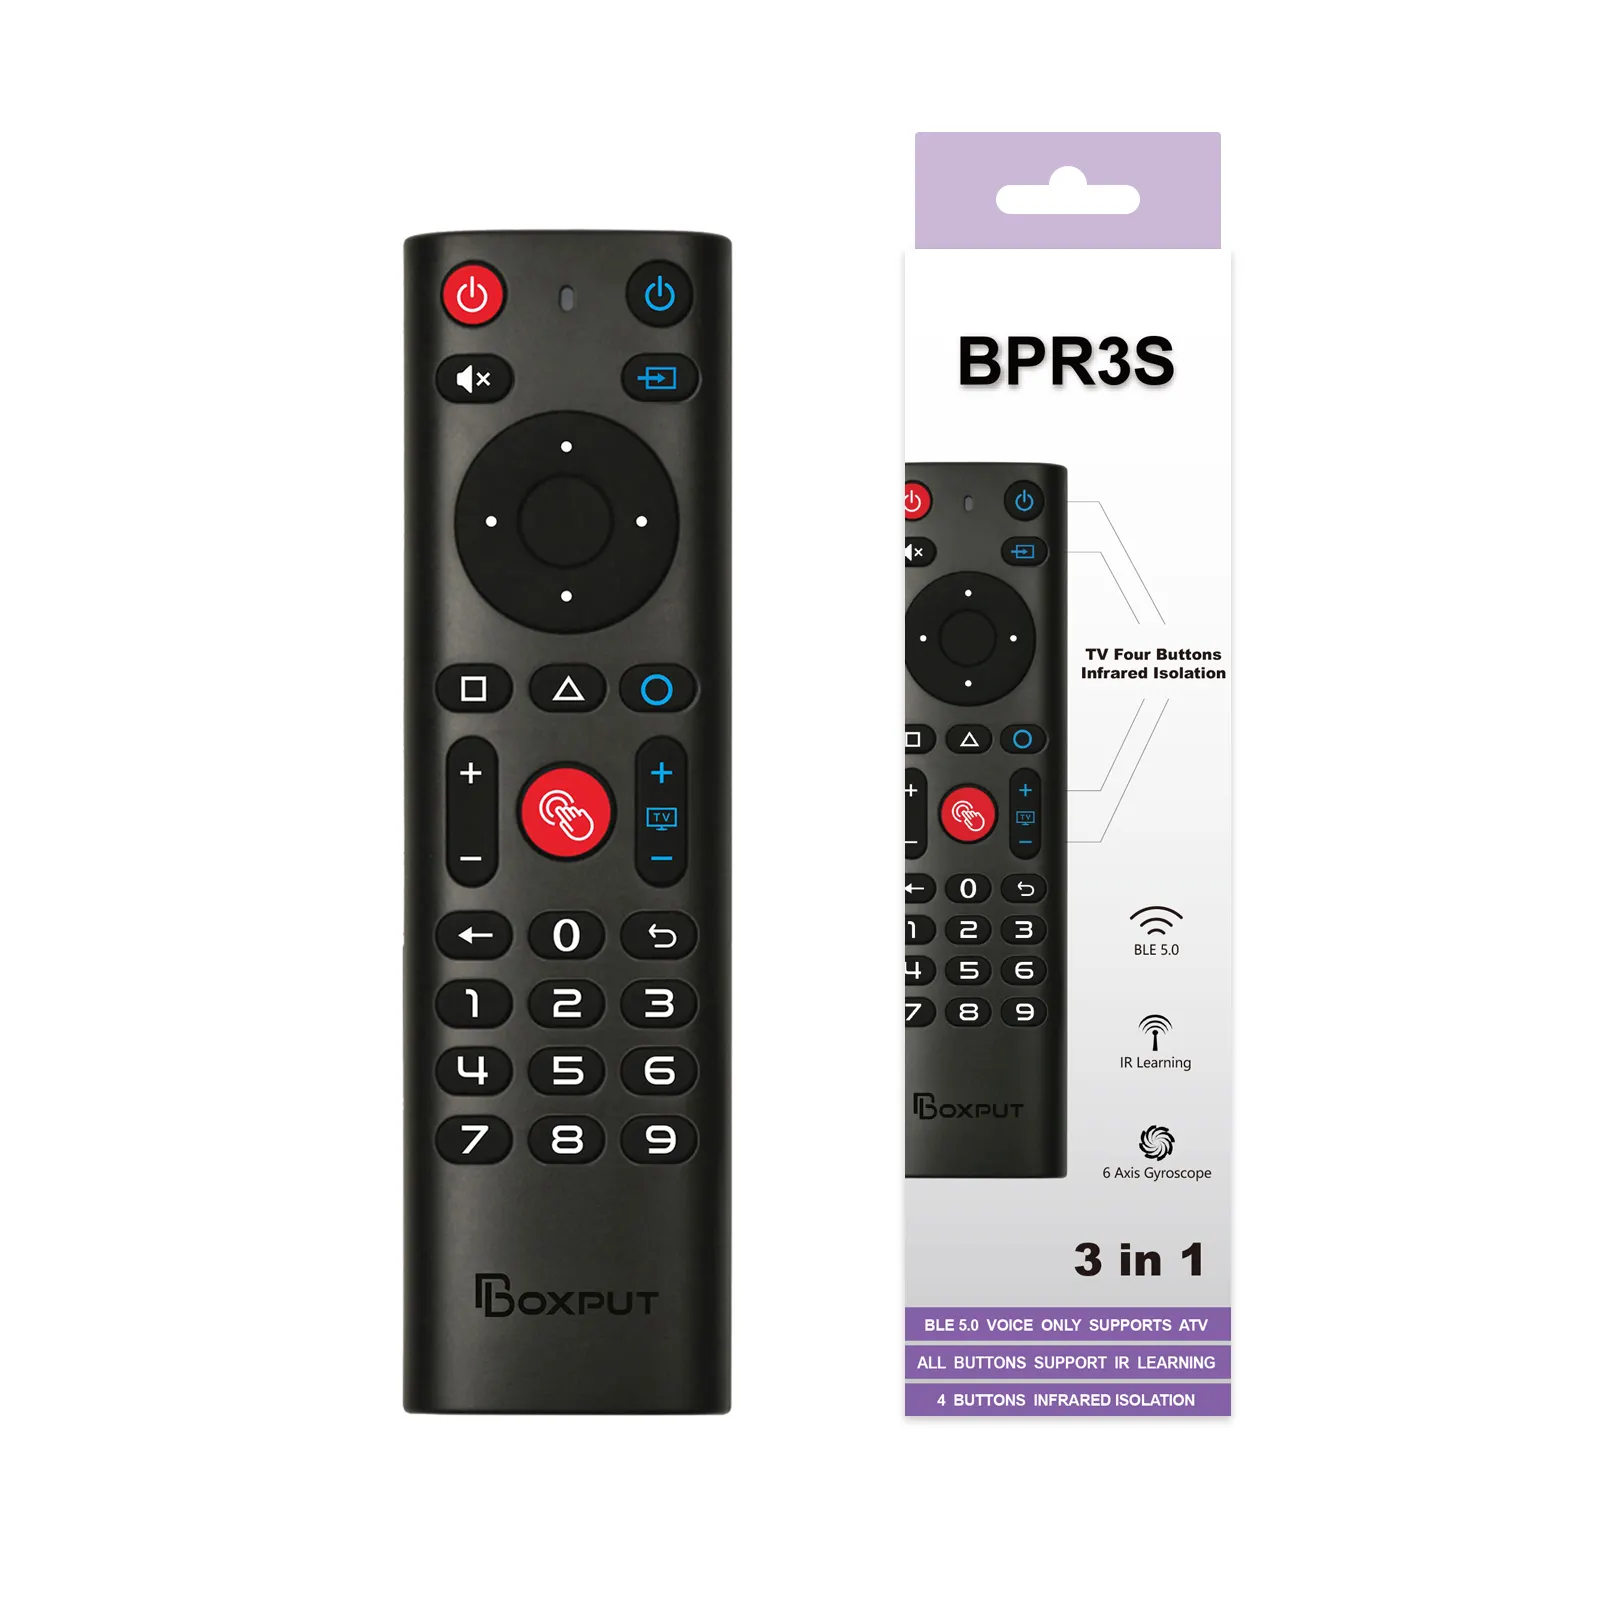 BOXPUT BPR3S BT Voice Wireless Air mouse remoto BT5.0 6 AXIS Gyro IR Aprendizaje Aislamiento Smart TV Control remoto Android TV Box